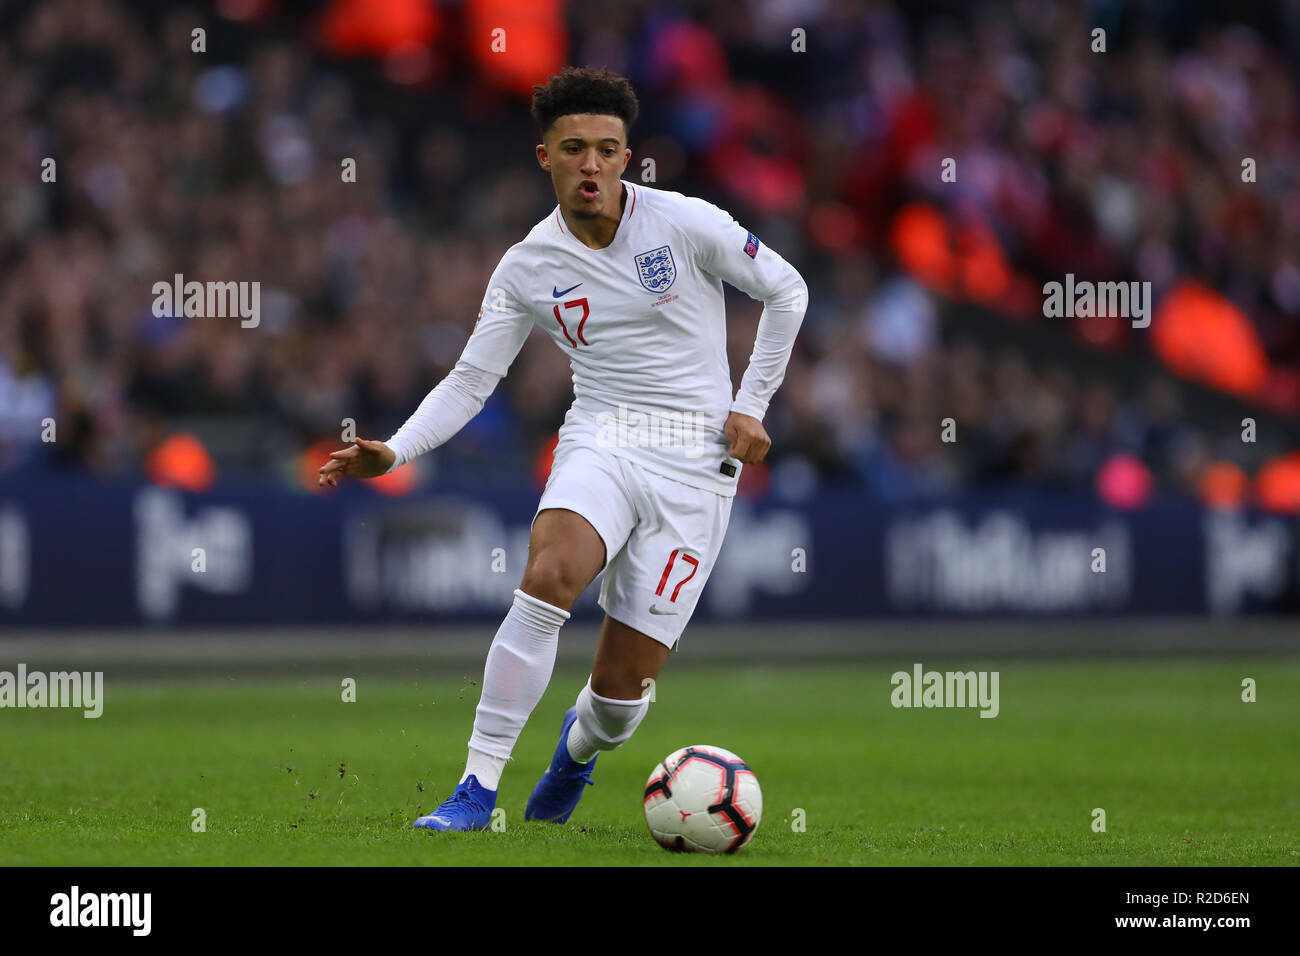 Jadon Sancho of England - England v Croatia , UEFA Nations League - Group A4, Wembley Stadium, London - 18th November 2018 Stock Photo